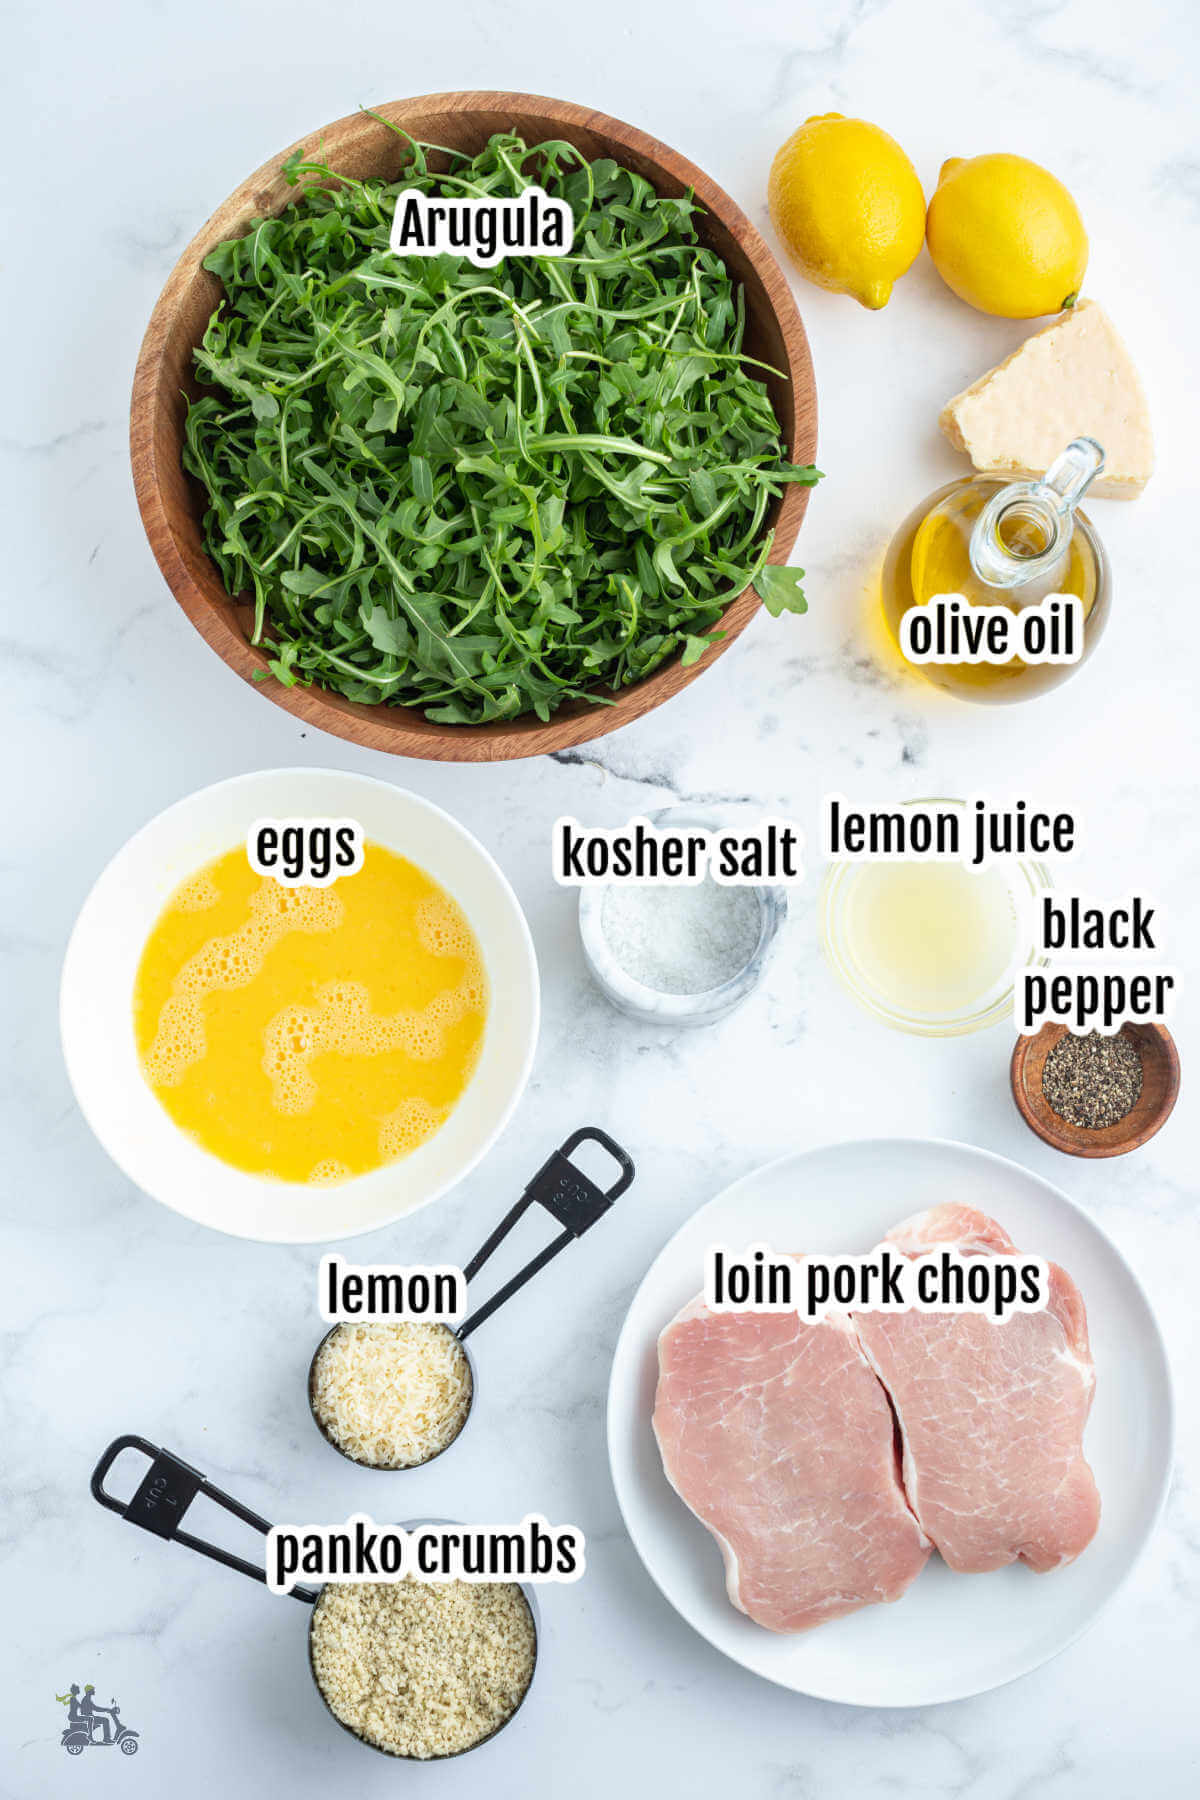 Image of ingredients needed to make the Pork Chops Milanese with Arugula Salad tossed in lemon vinaigrette. 